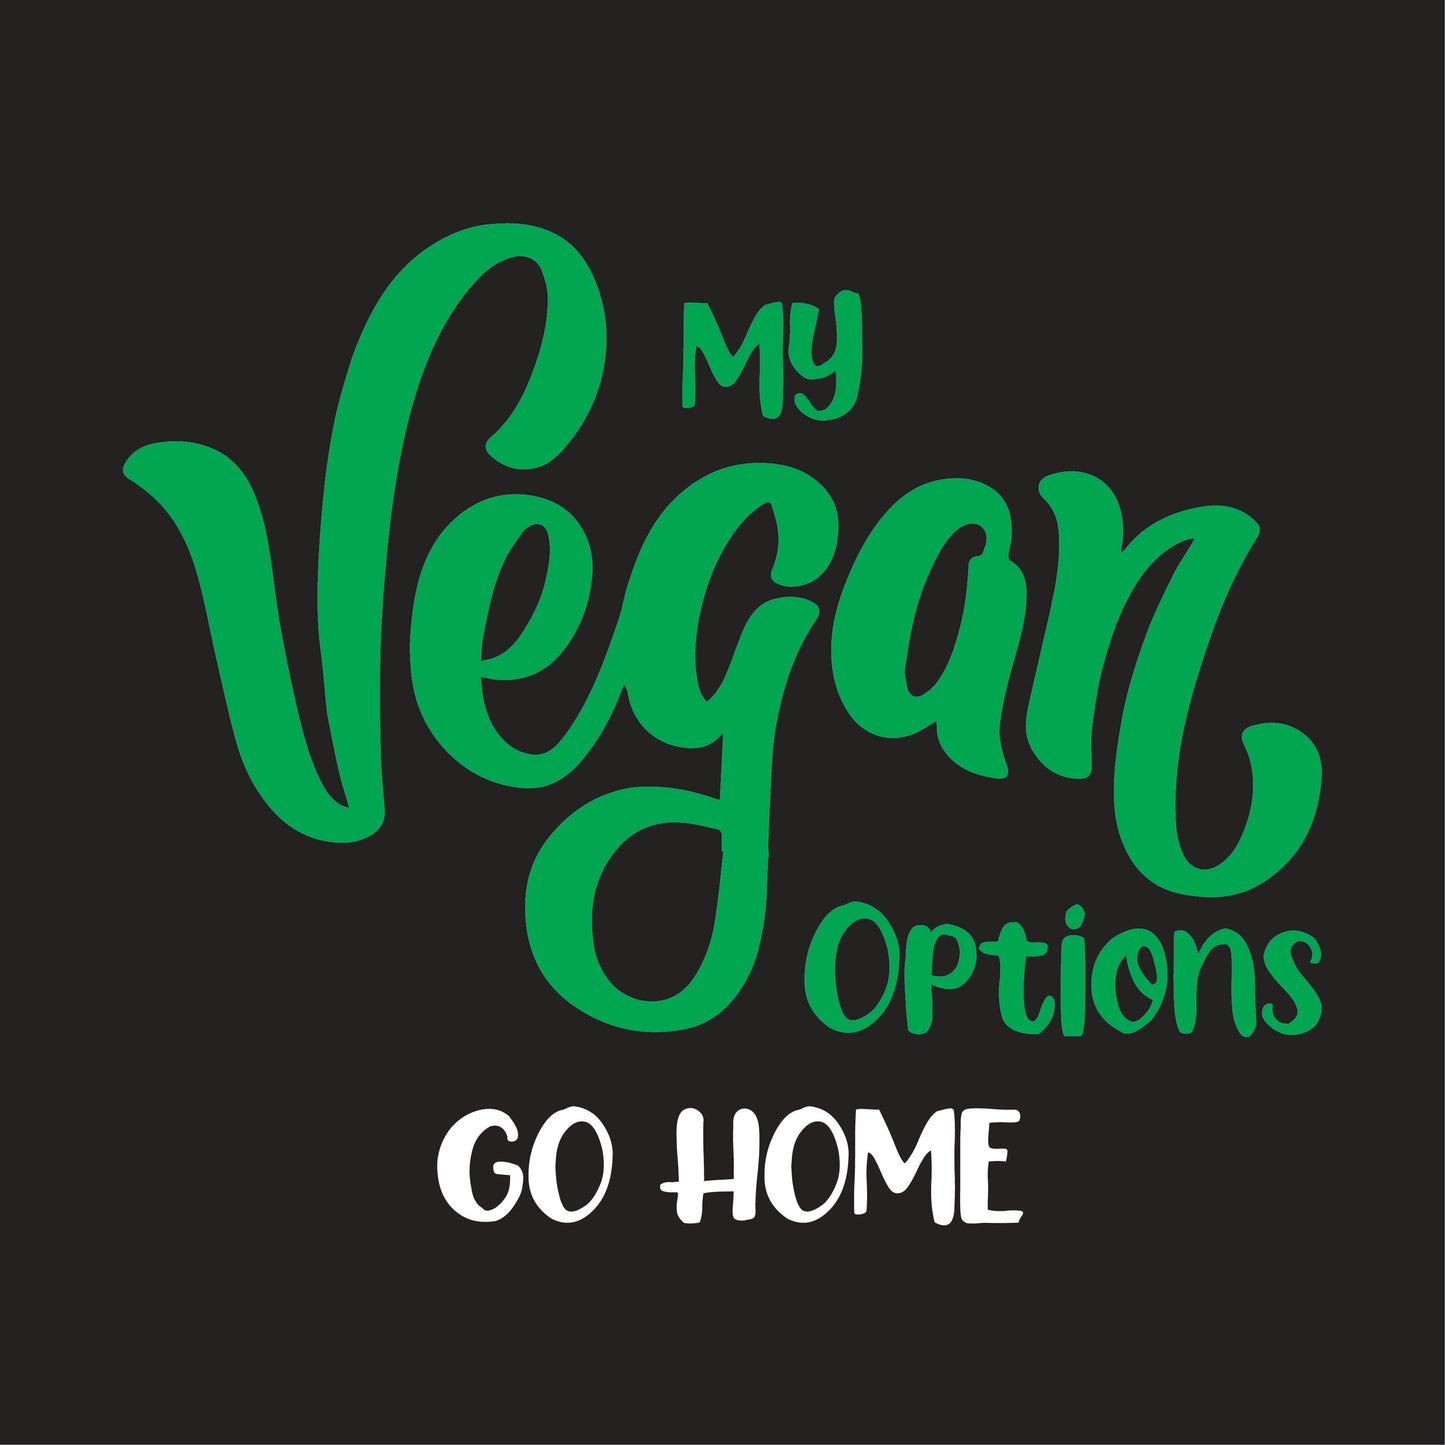 My Vegan Options Go Home